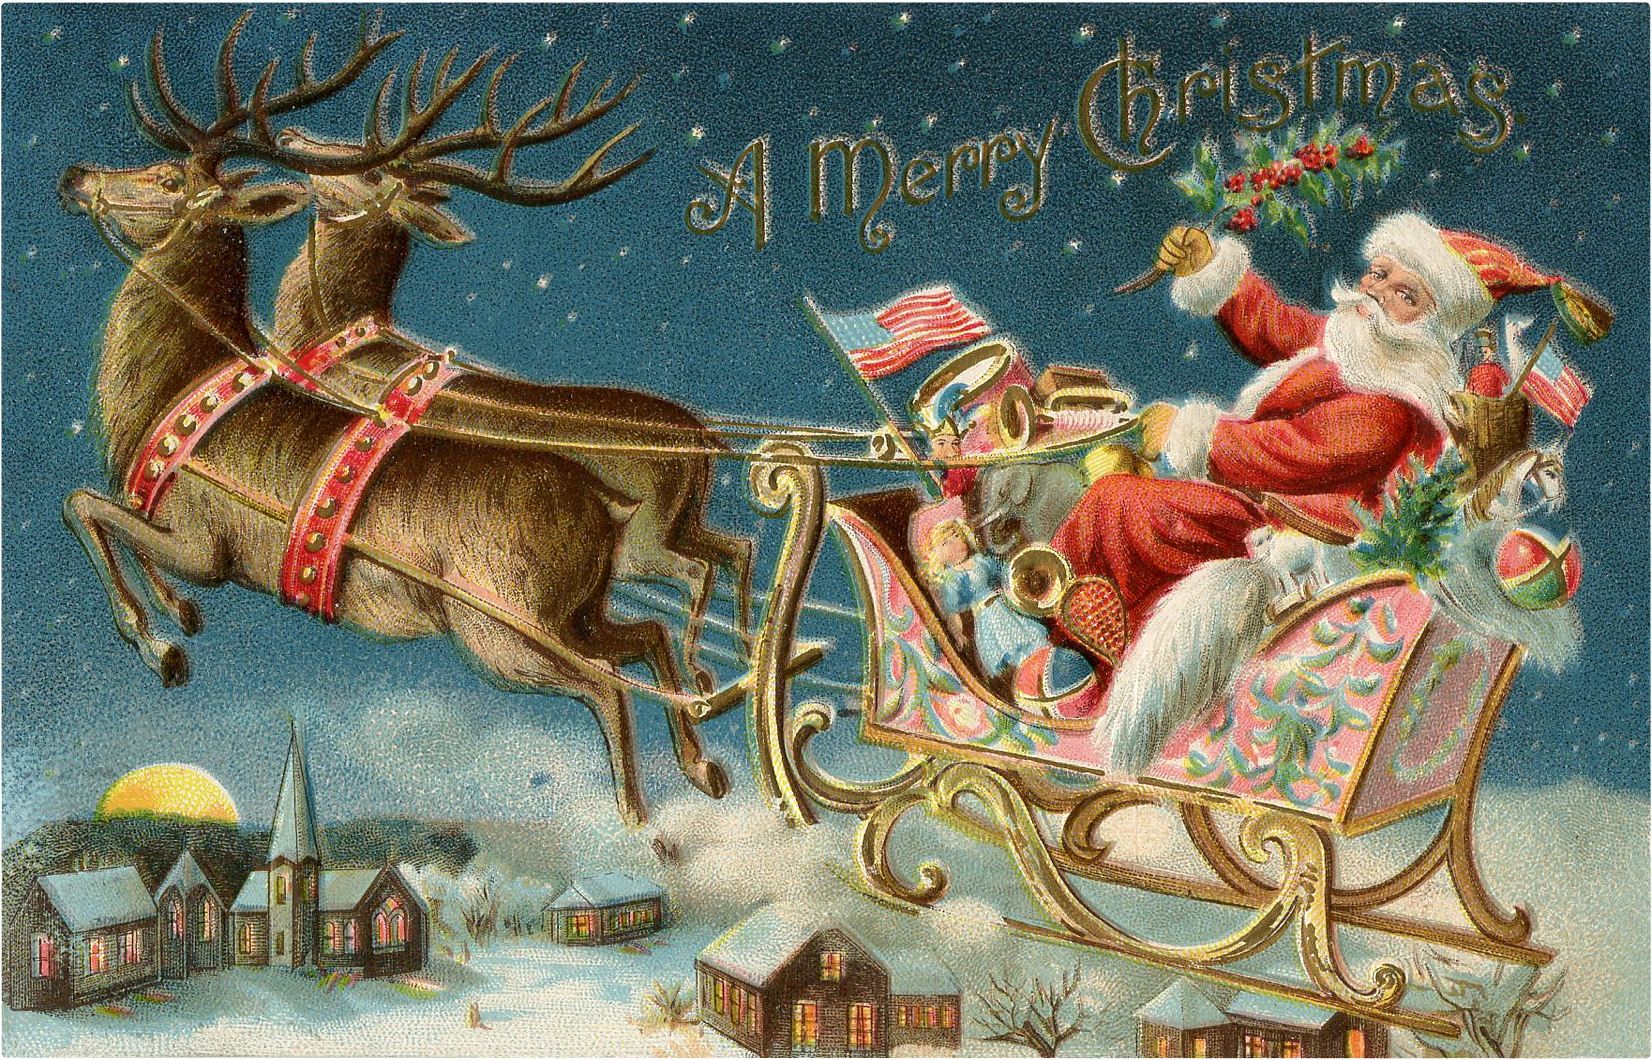  santa images and. Sleigh clipart christmas sleigh ride